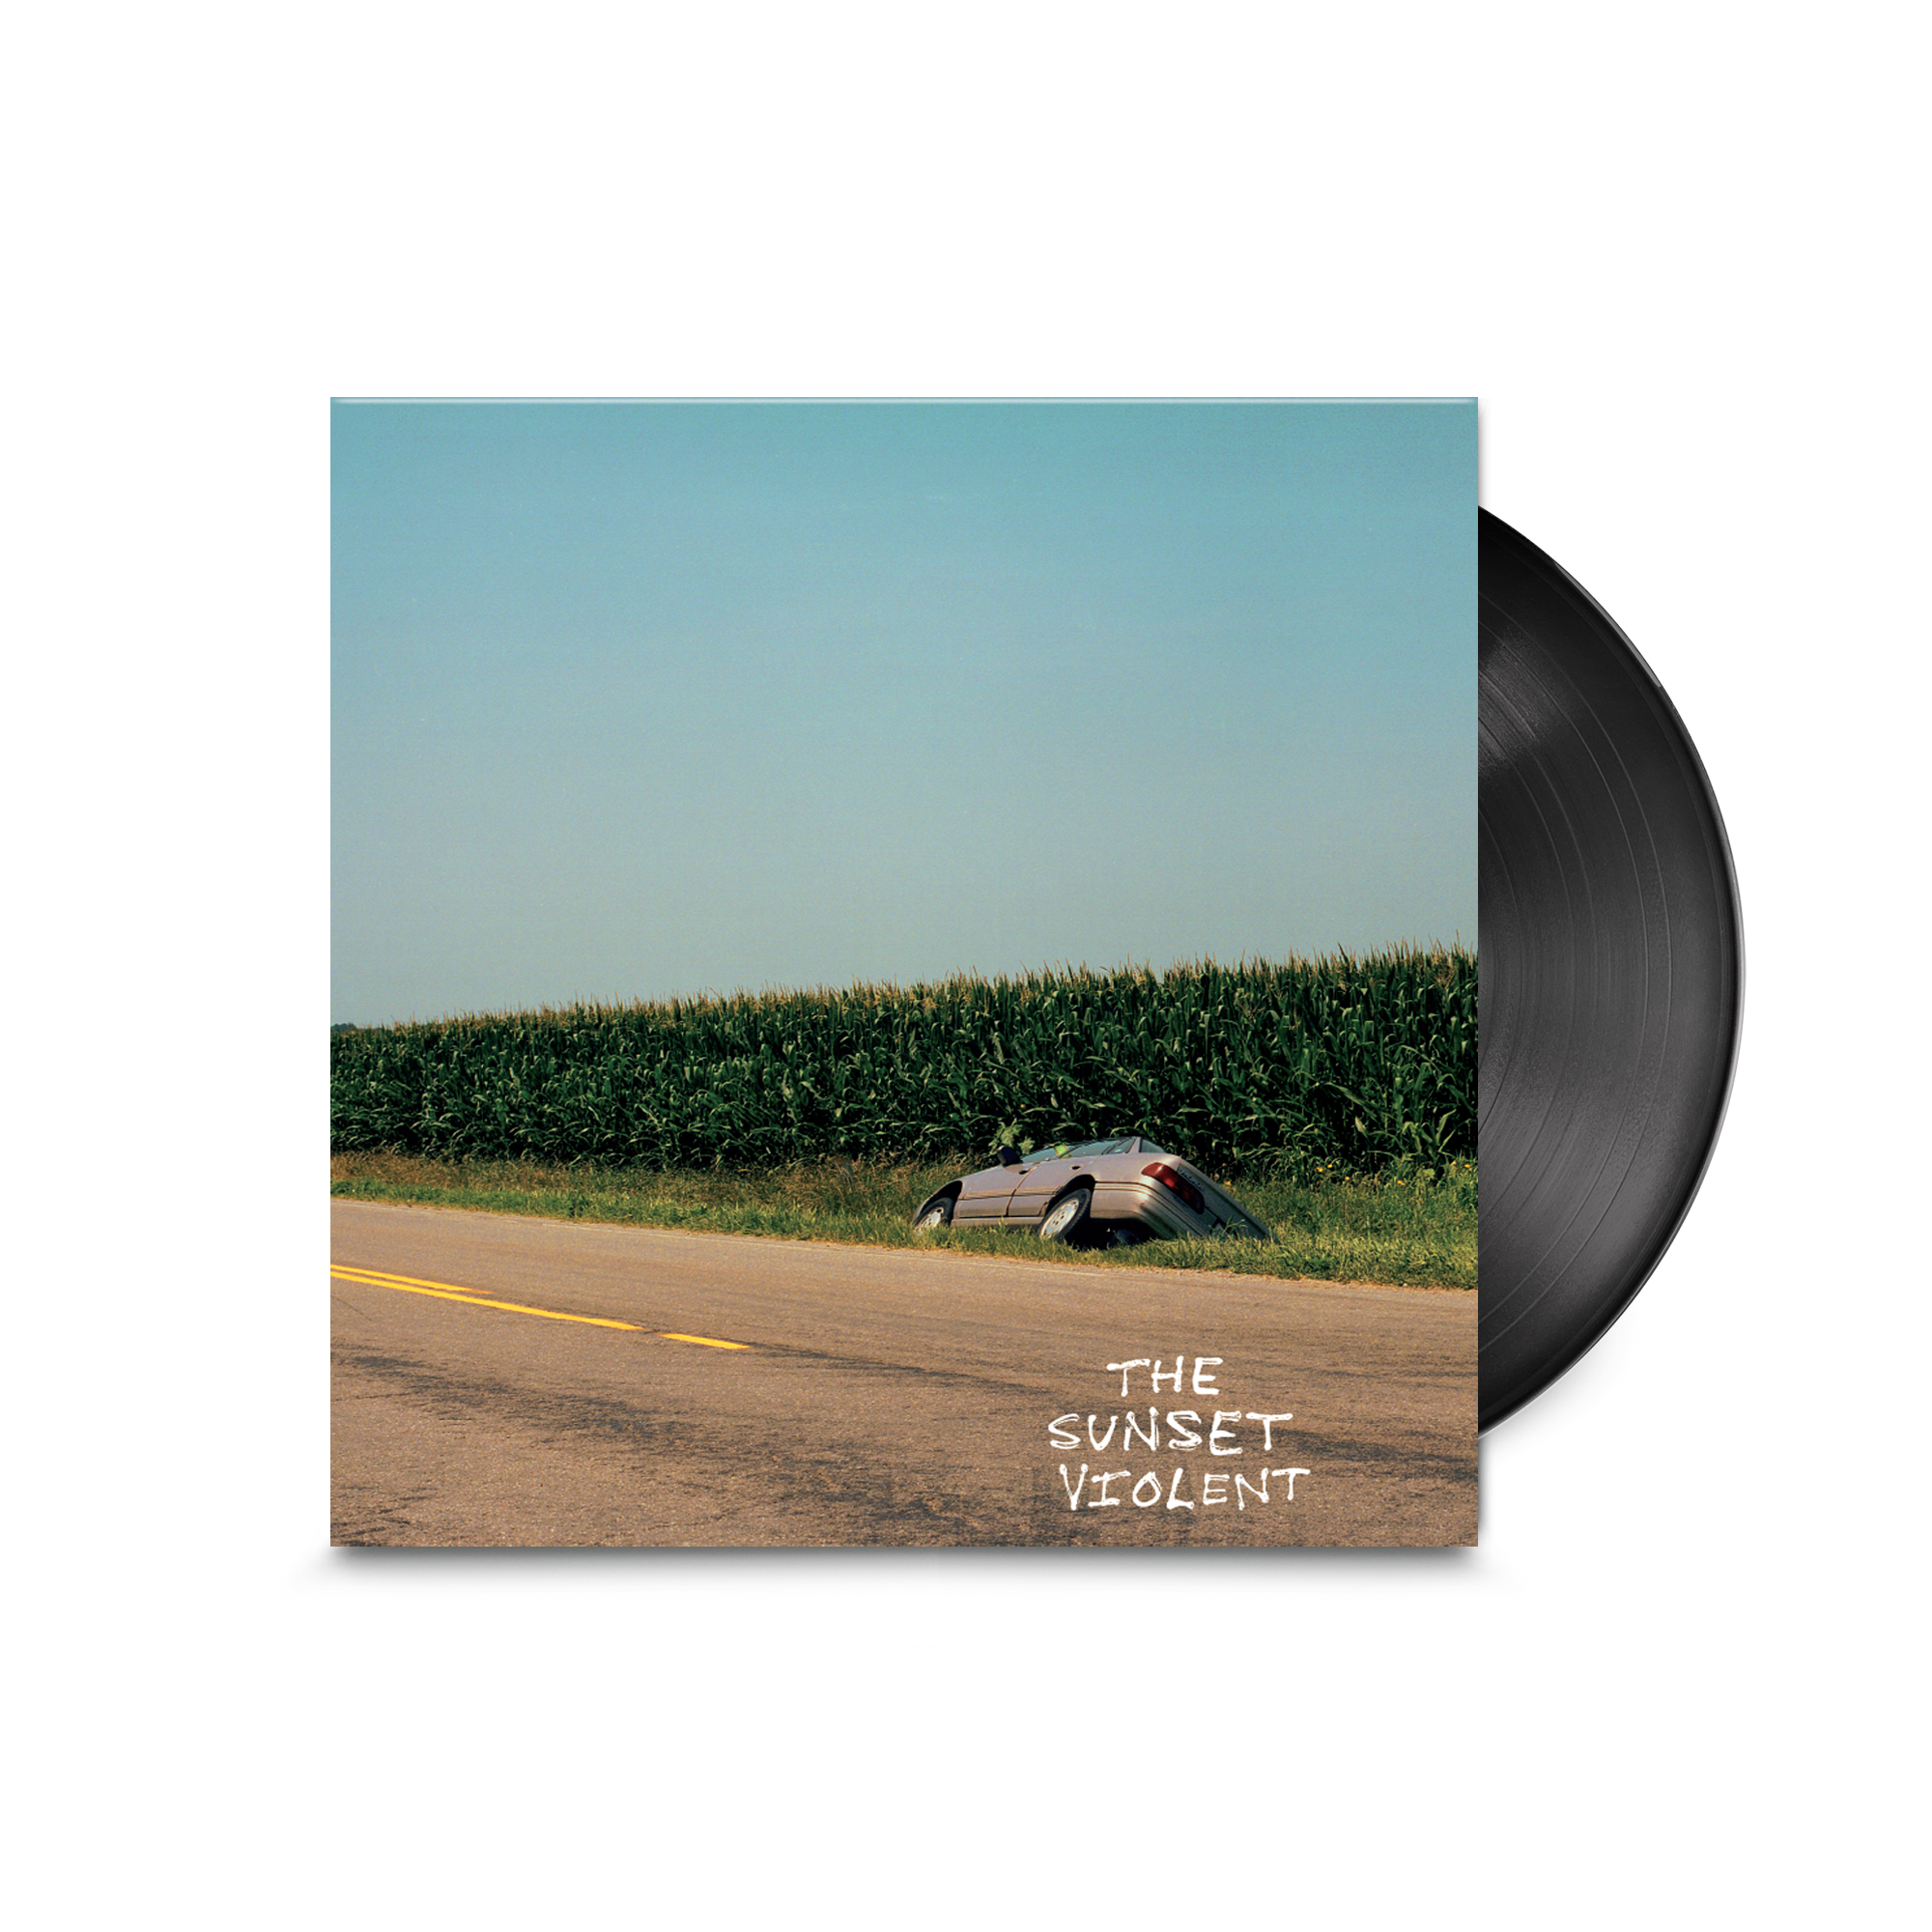 The Sunset Violent: Vinyl LP + Signed Print